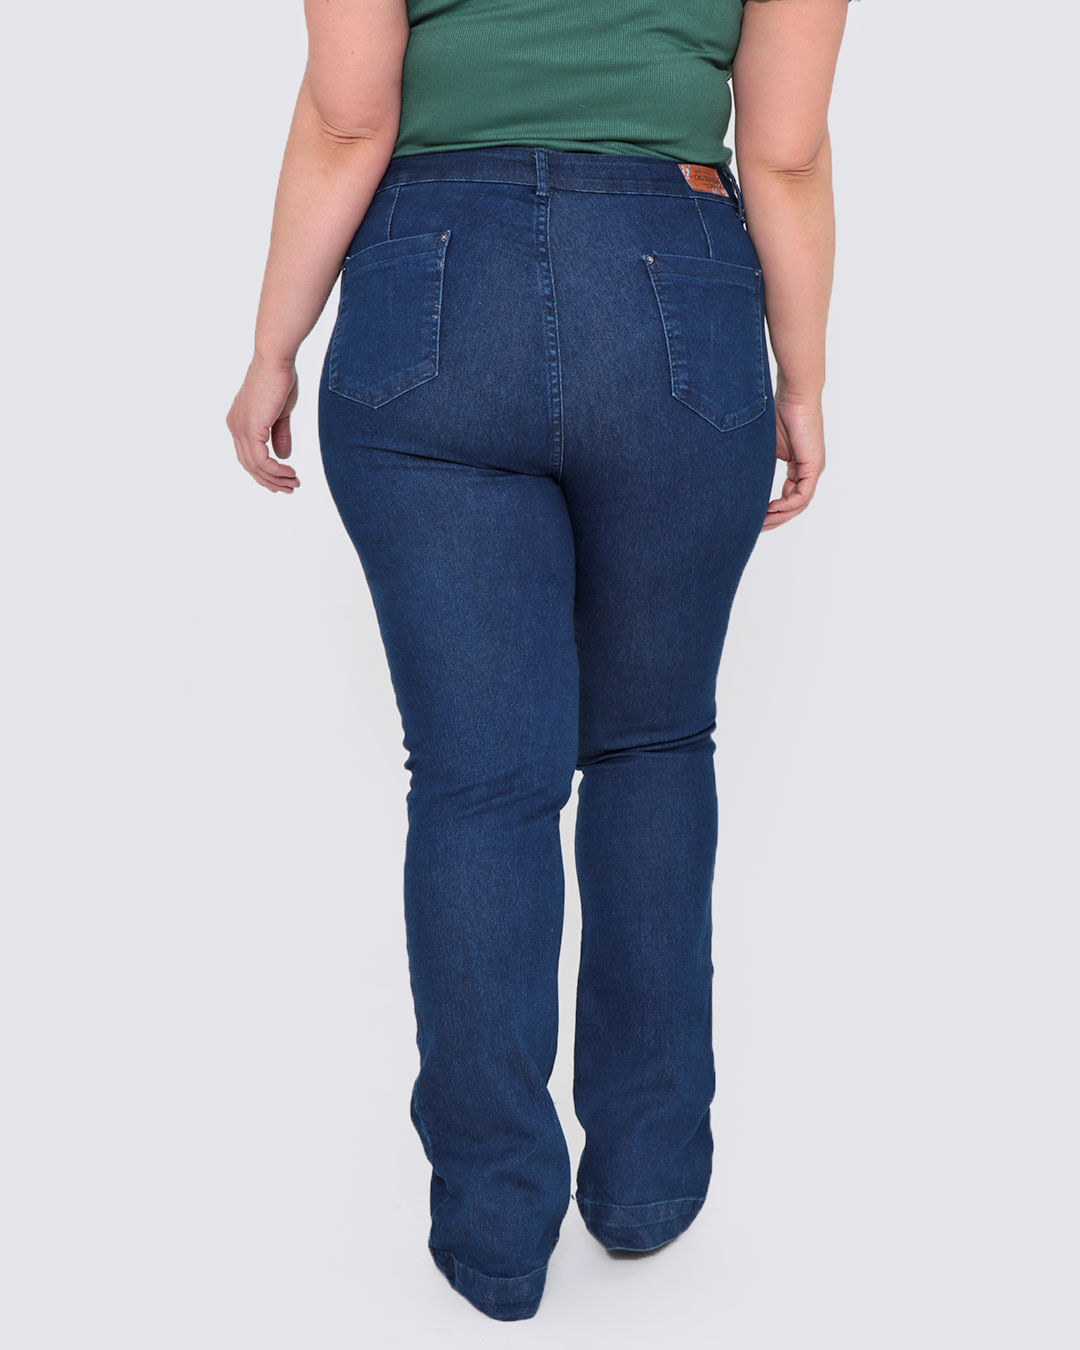 Calca-Jeans-Feminina-Plus-Size-Flare-Azul-Escuro